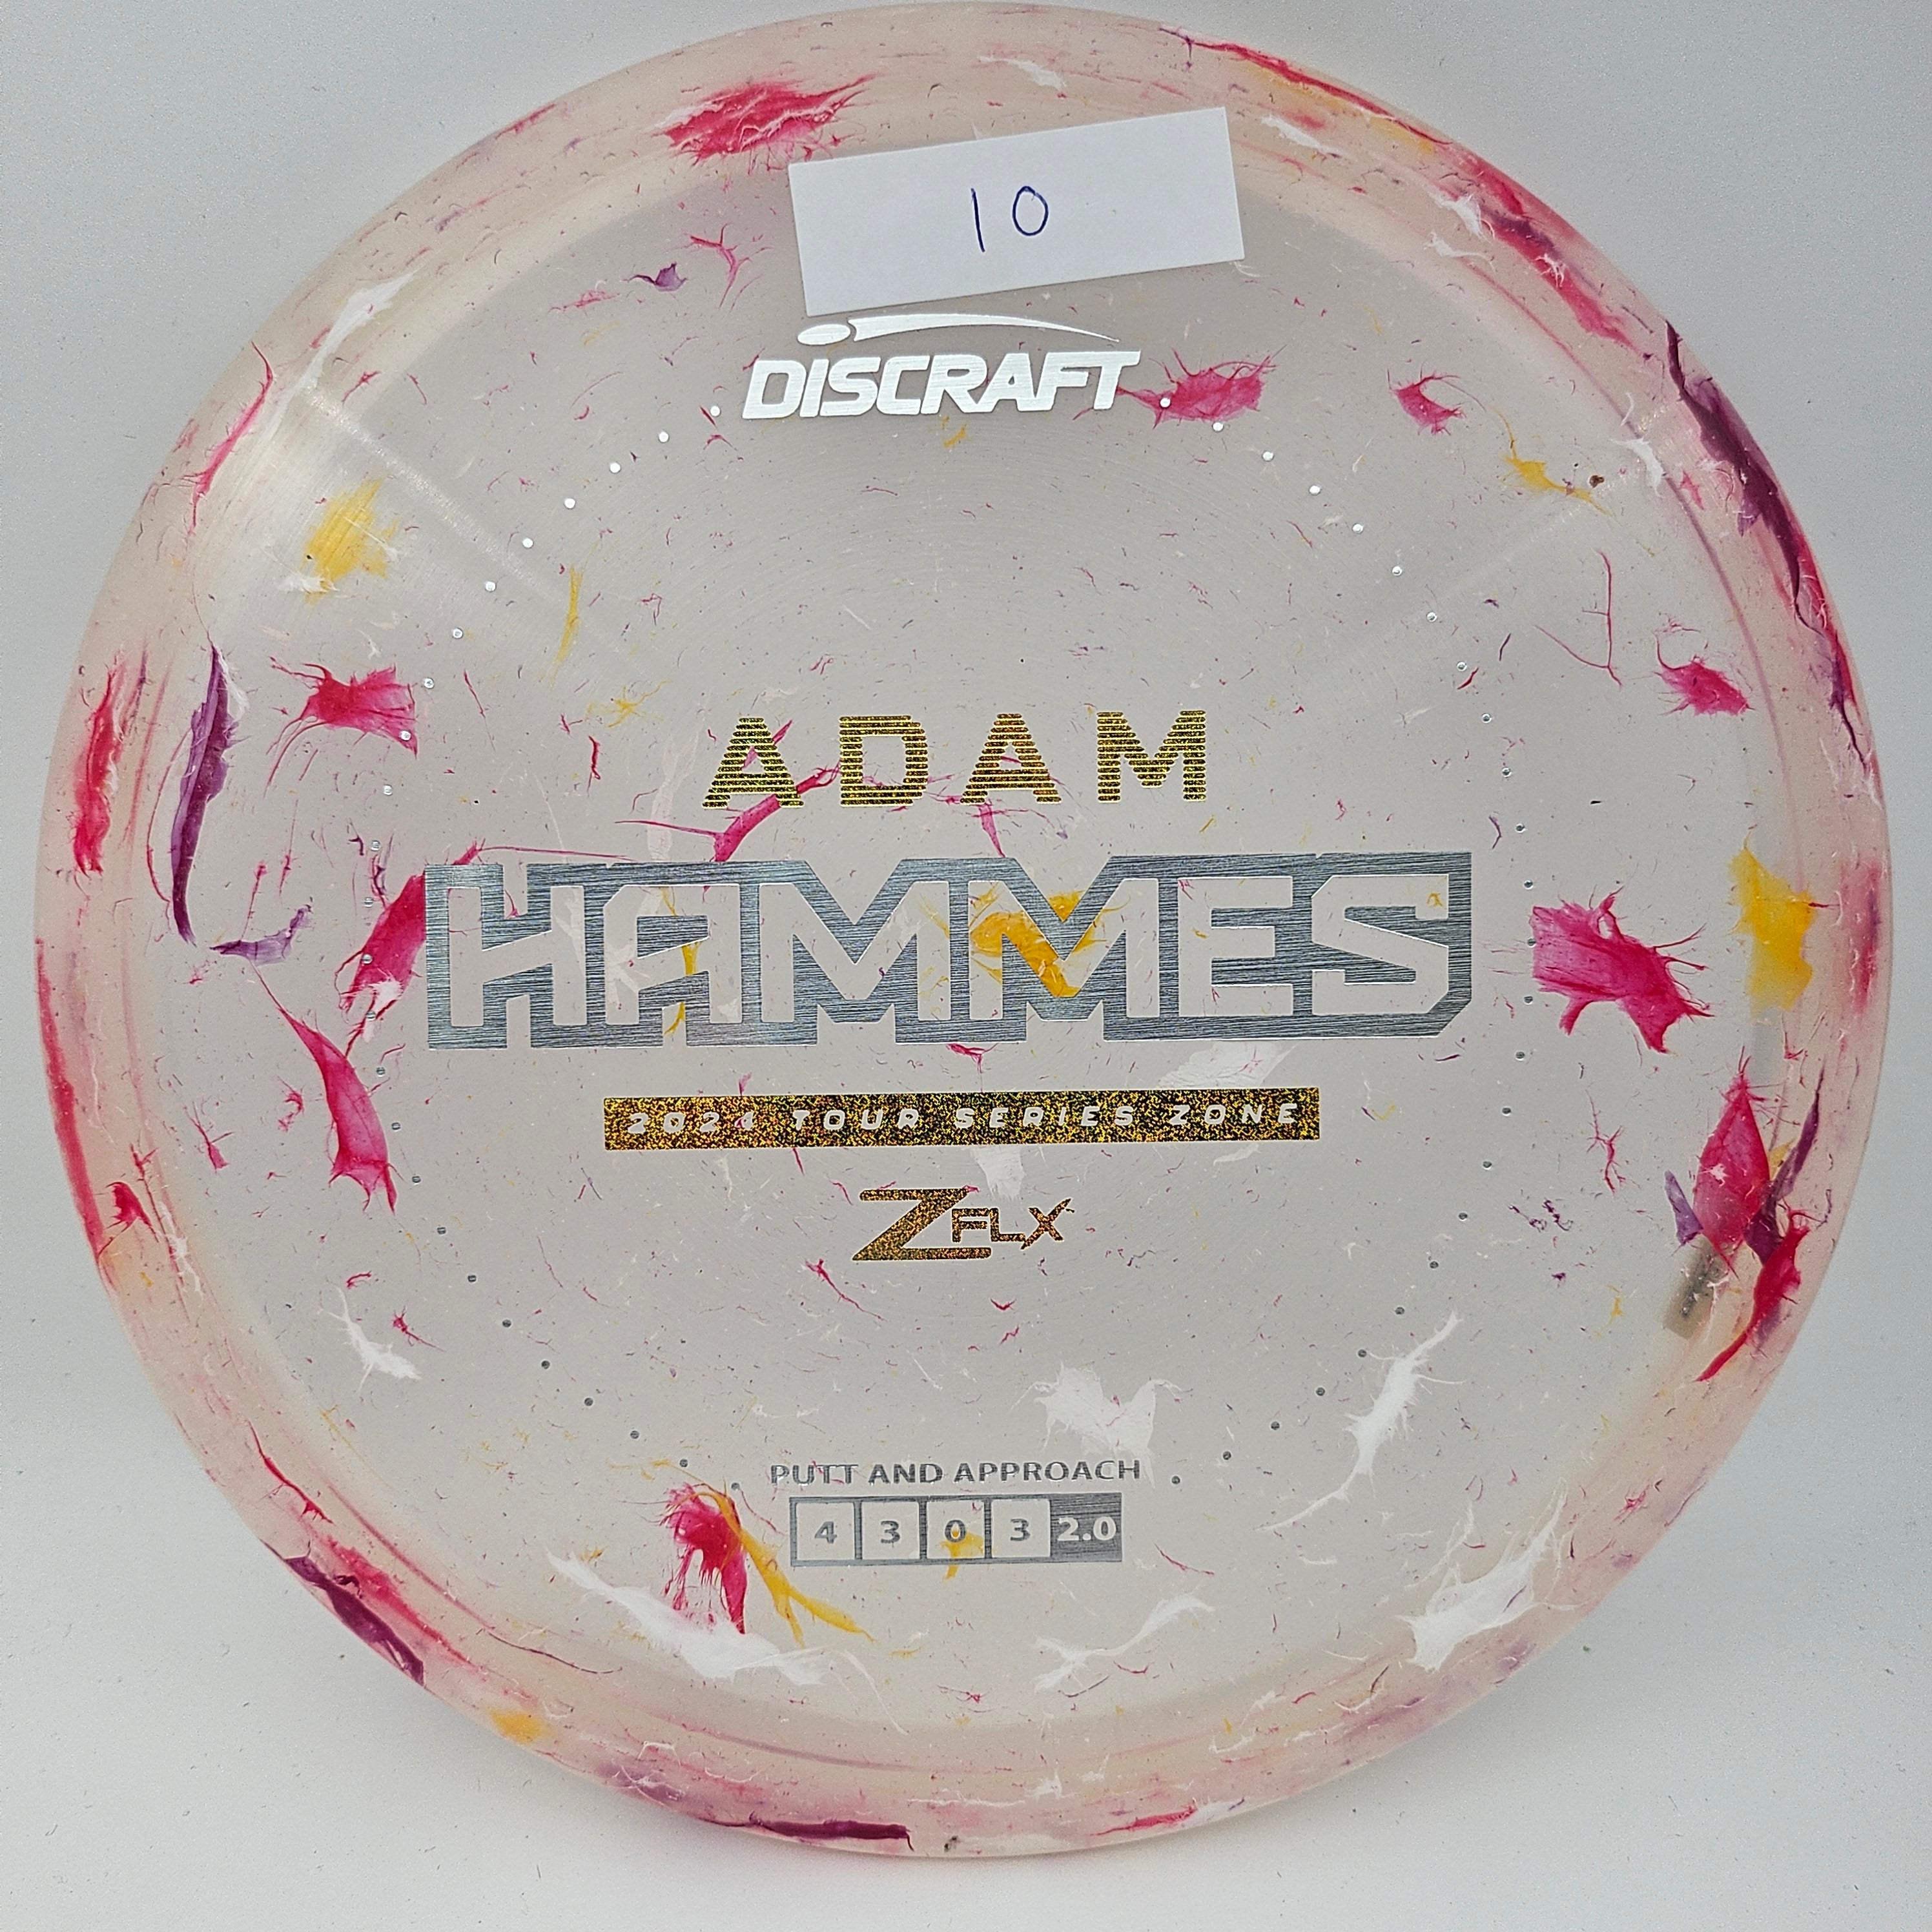 Z FLX Jawbreaker Zone - Adam Hammes Tour Series 2024